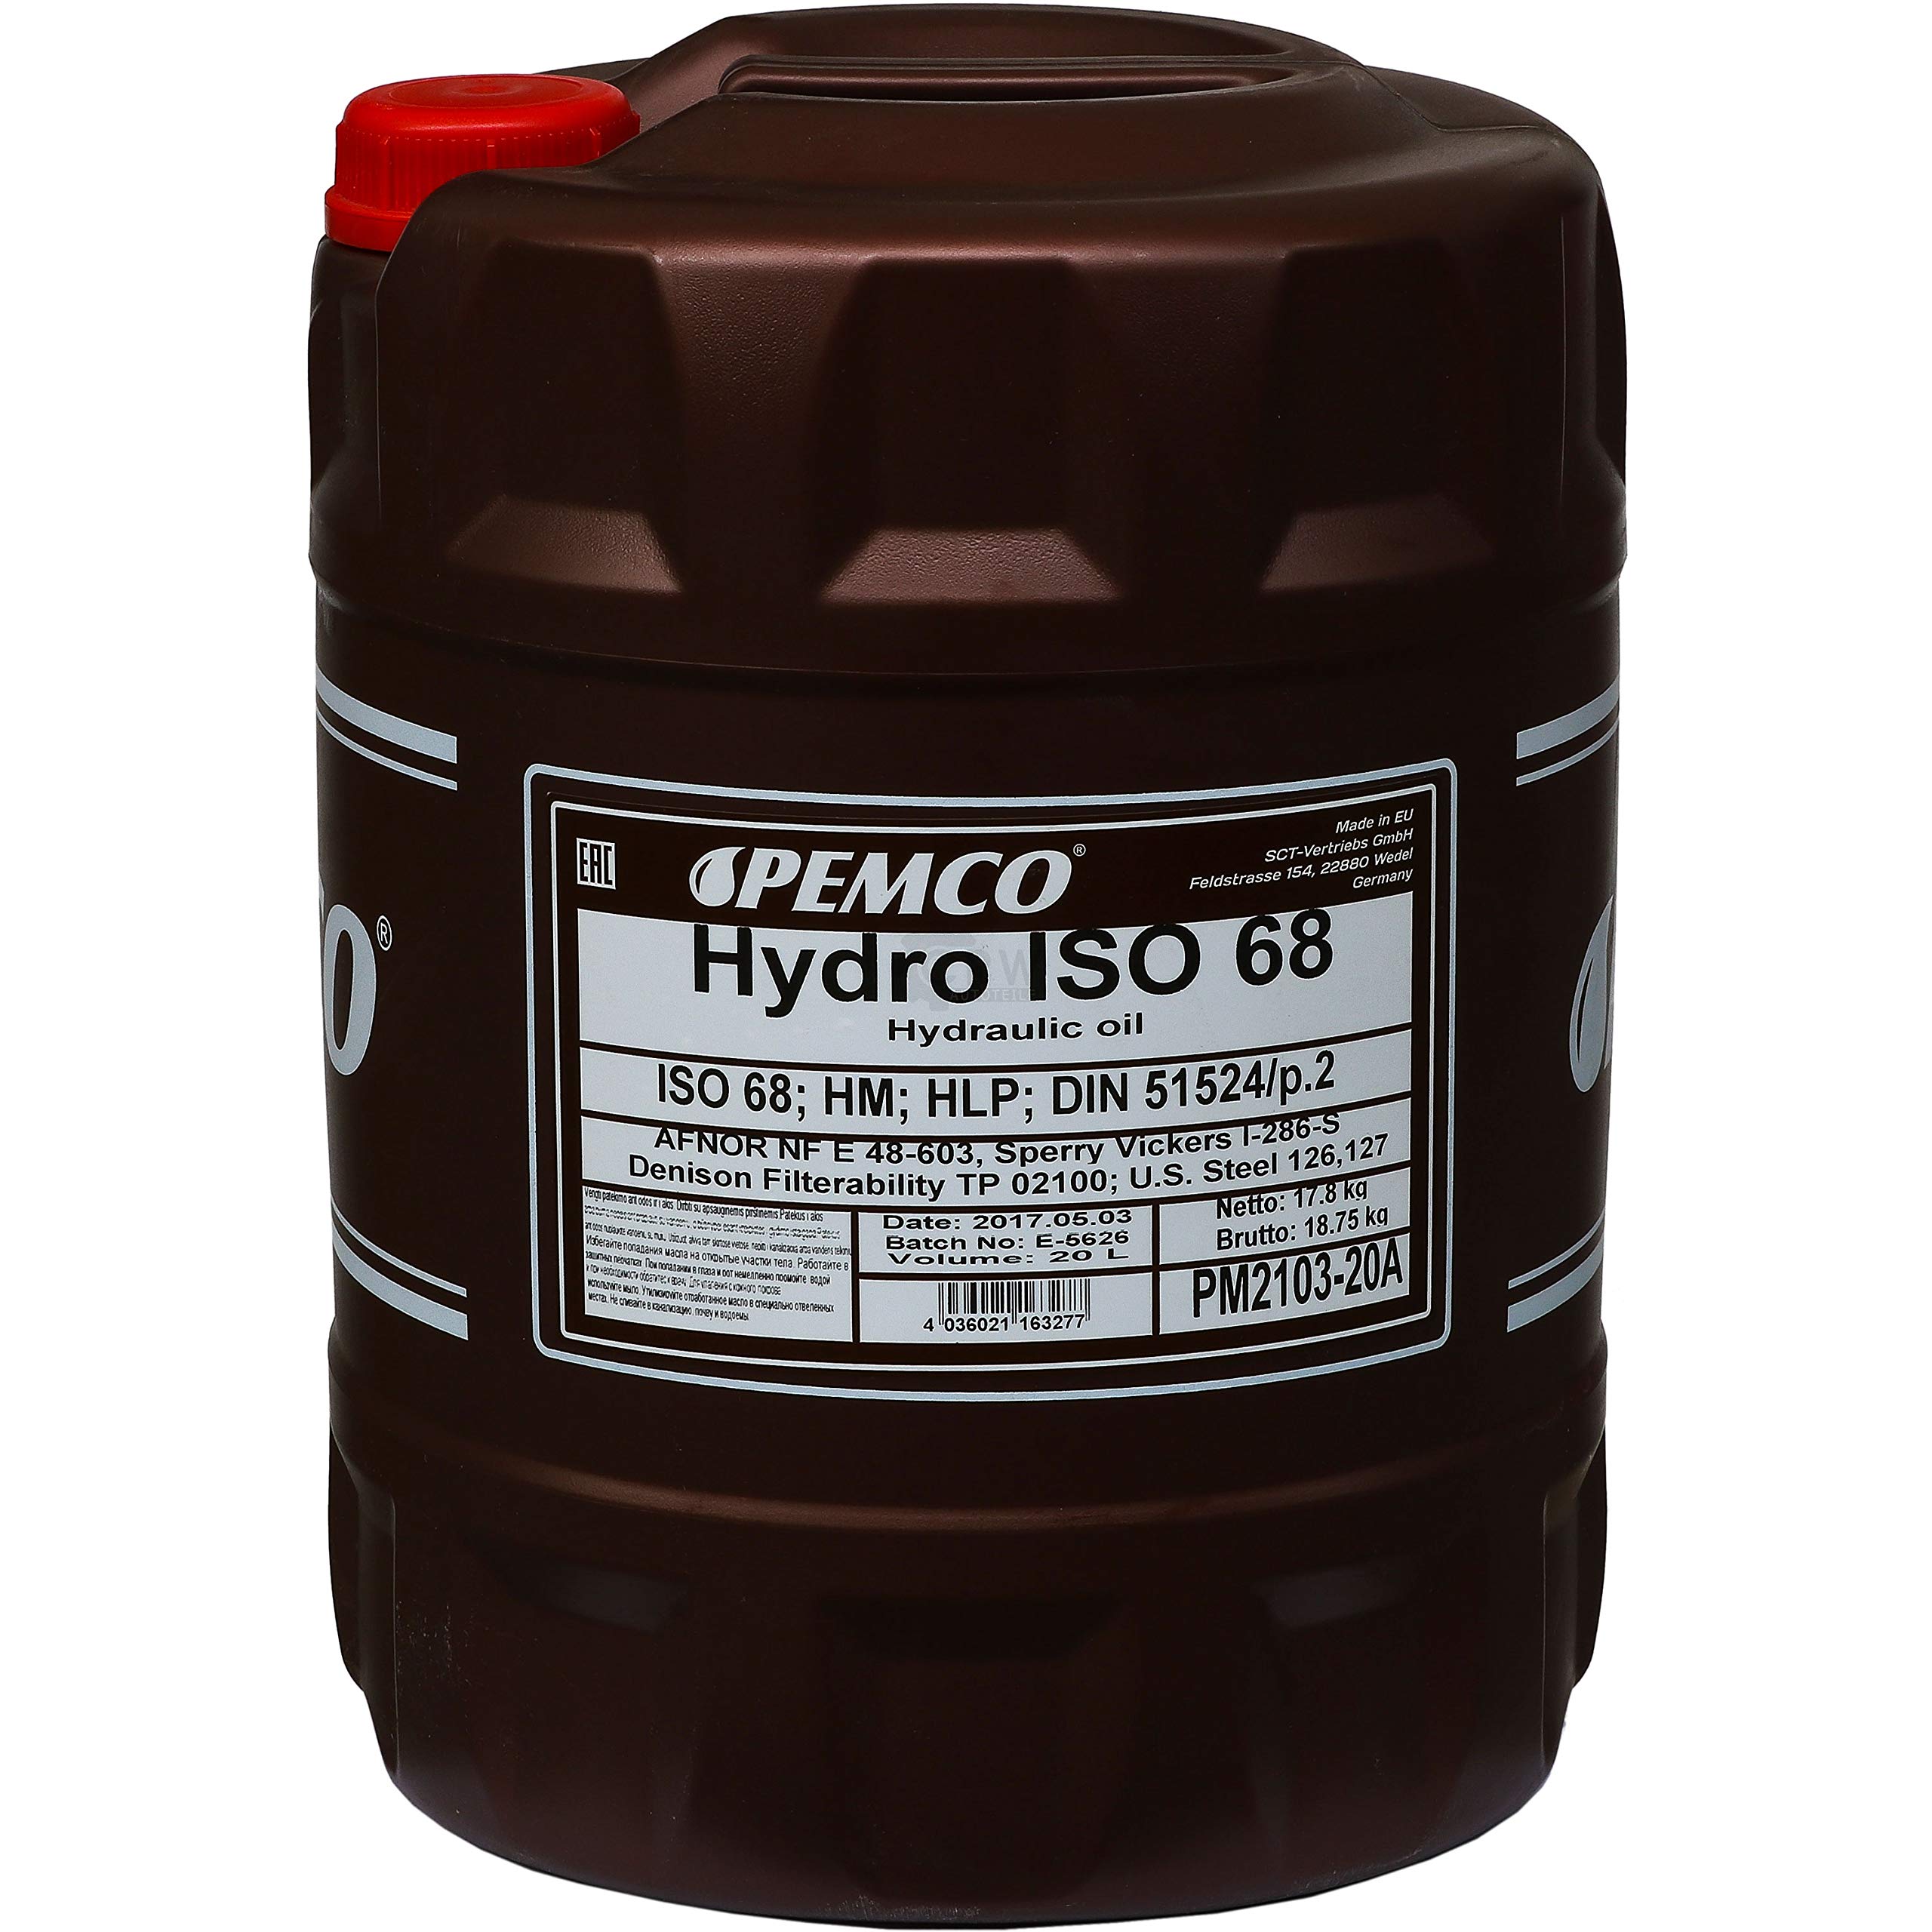 Sct - Mannol PM2103-20 - Hydrauliköl